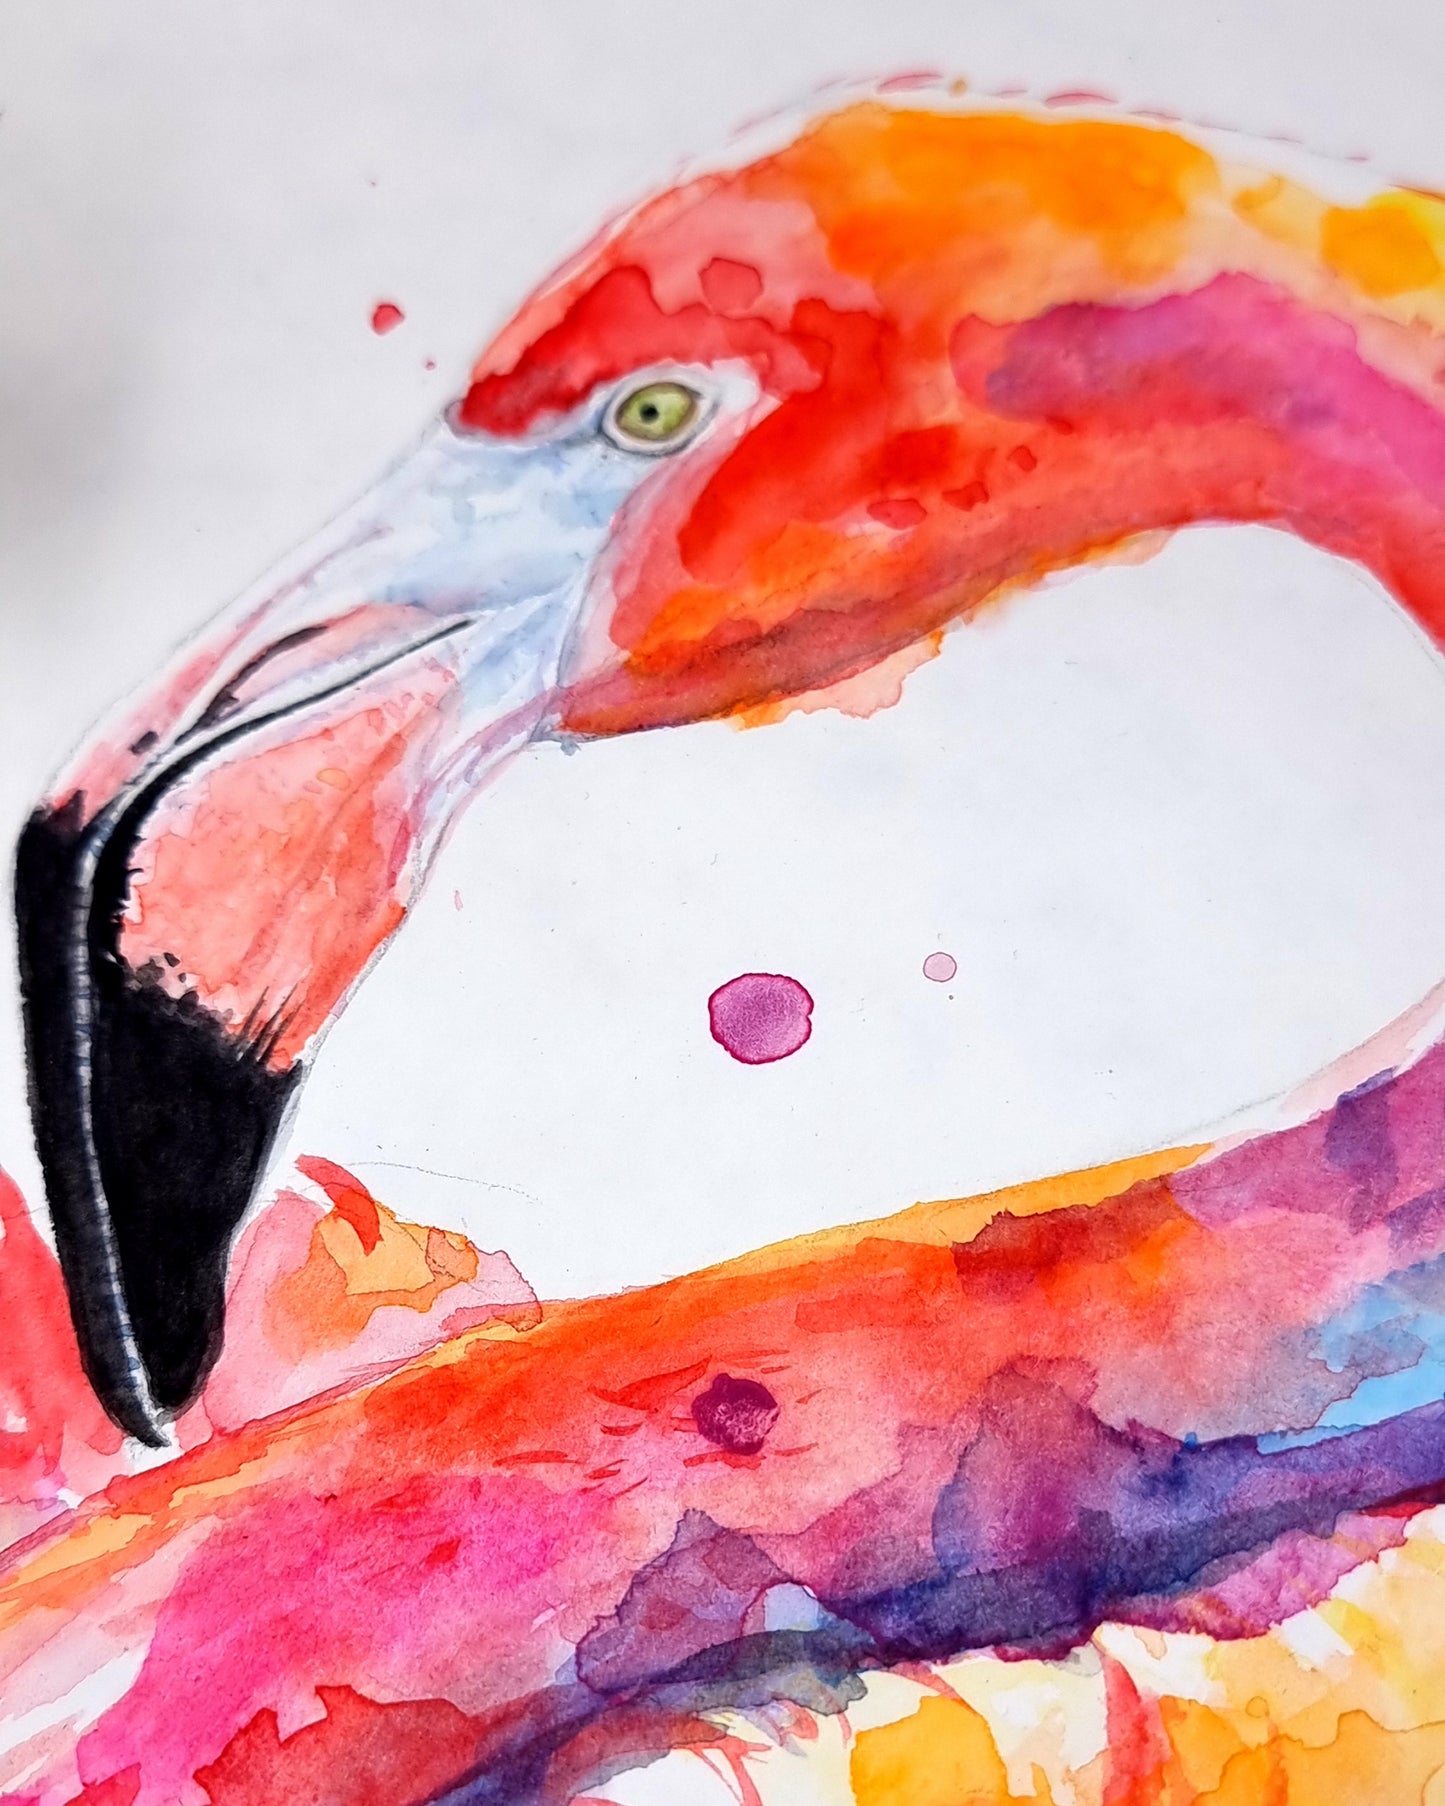 Flamingo in Aquarell - farbenfroher Kunstdruck - Flamingo Liya